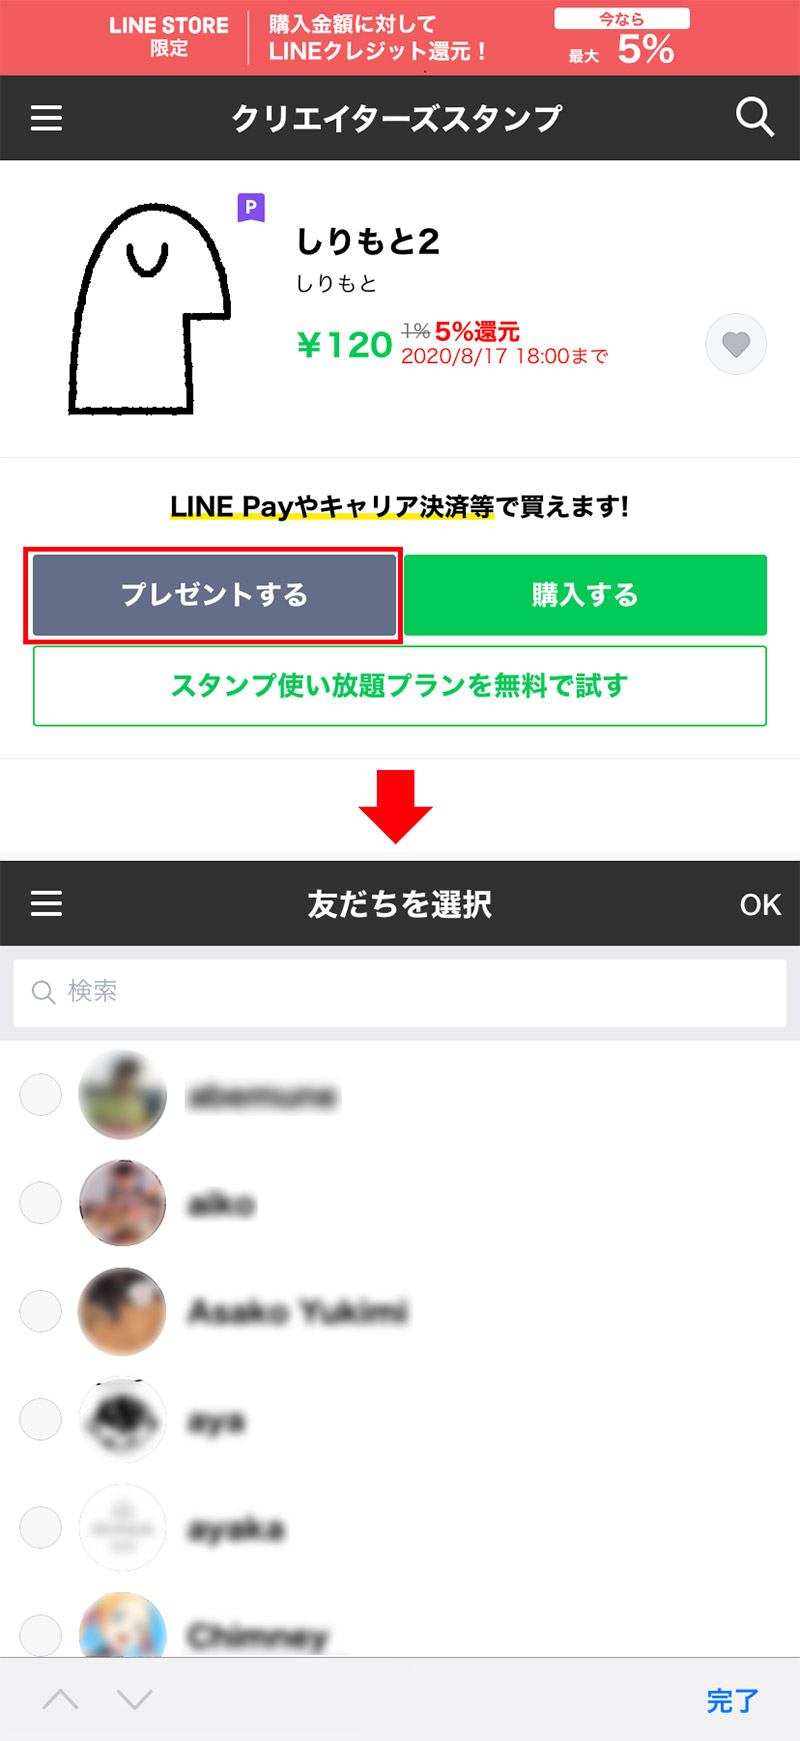 Line pay スタンプ 購入